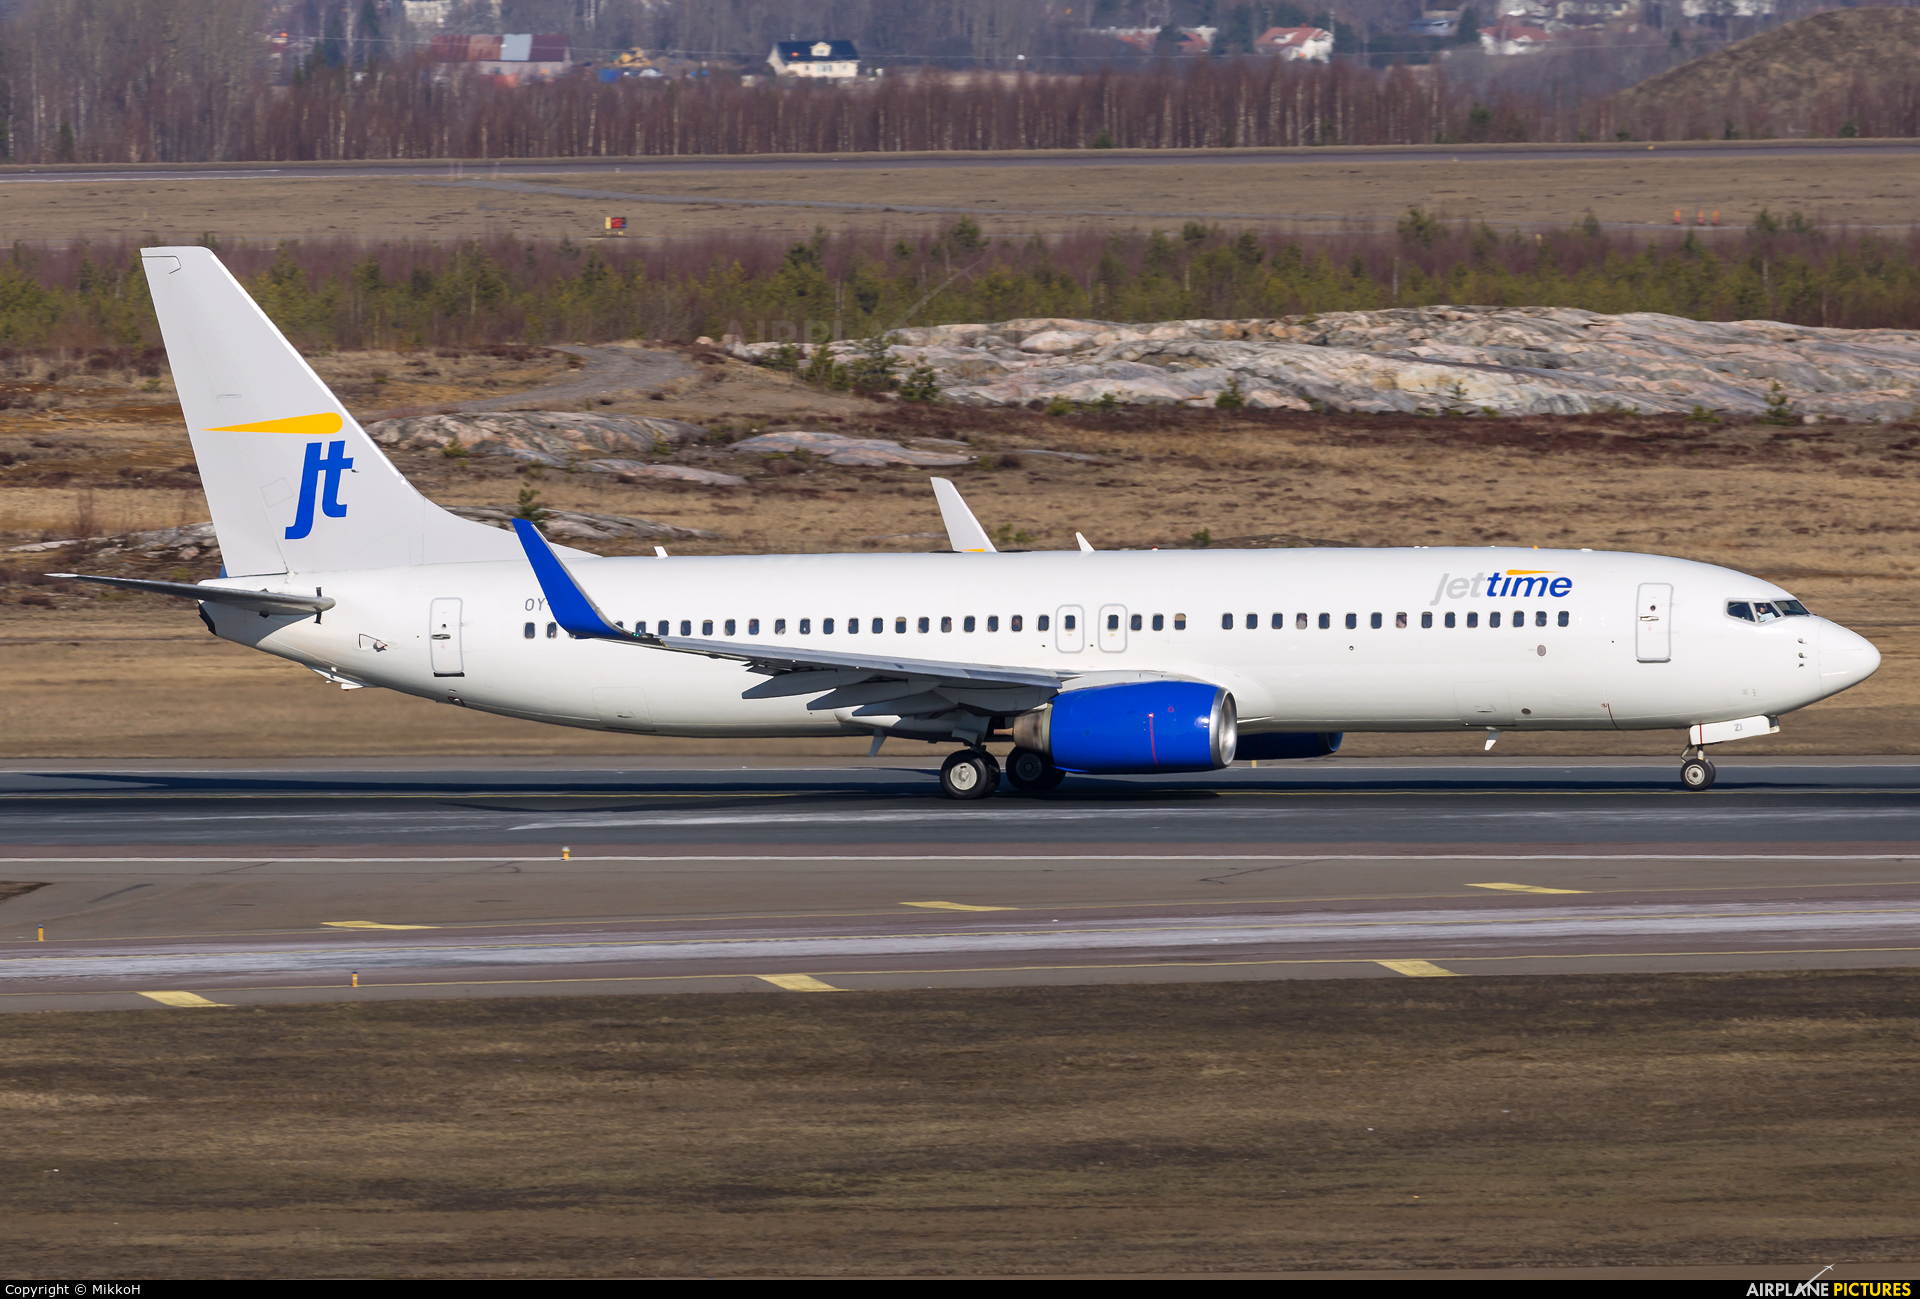 OY-JZI Jet Time Boeing 737-800 Helsinki - Vantaa | ID 1184291 Airplane-Pictures.net